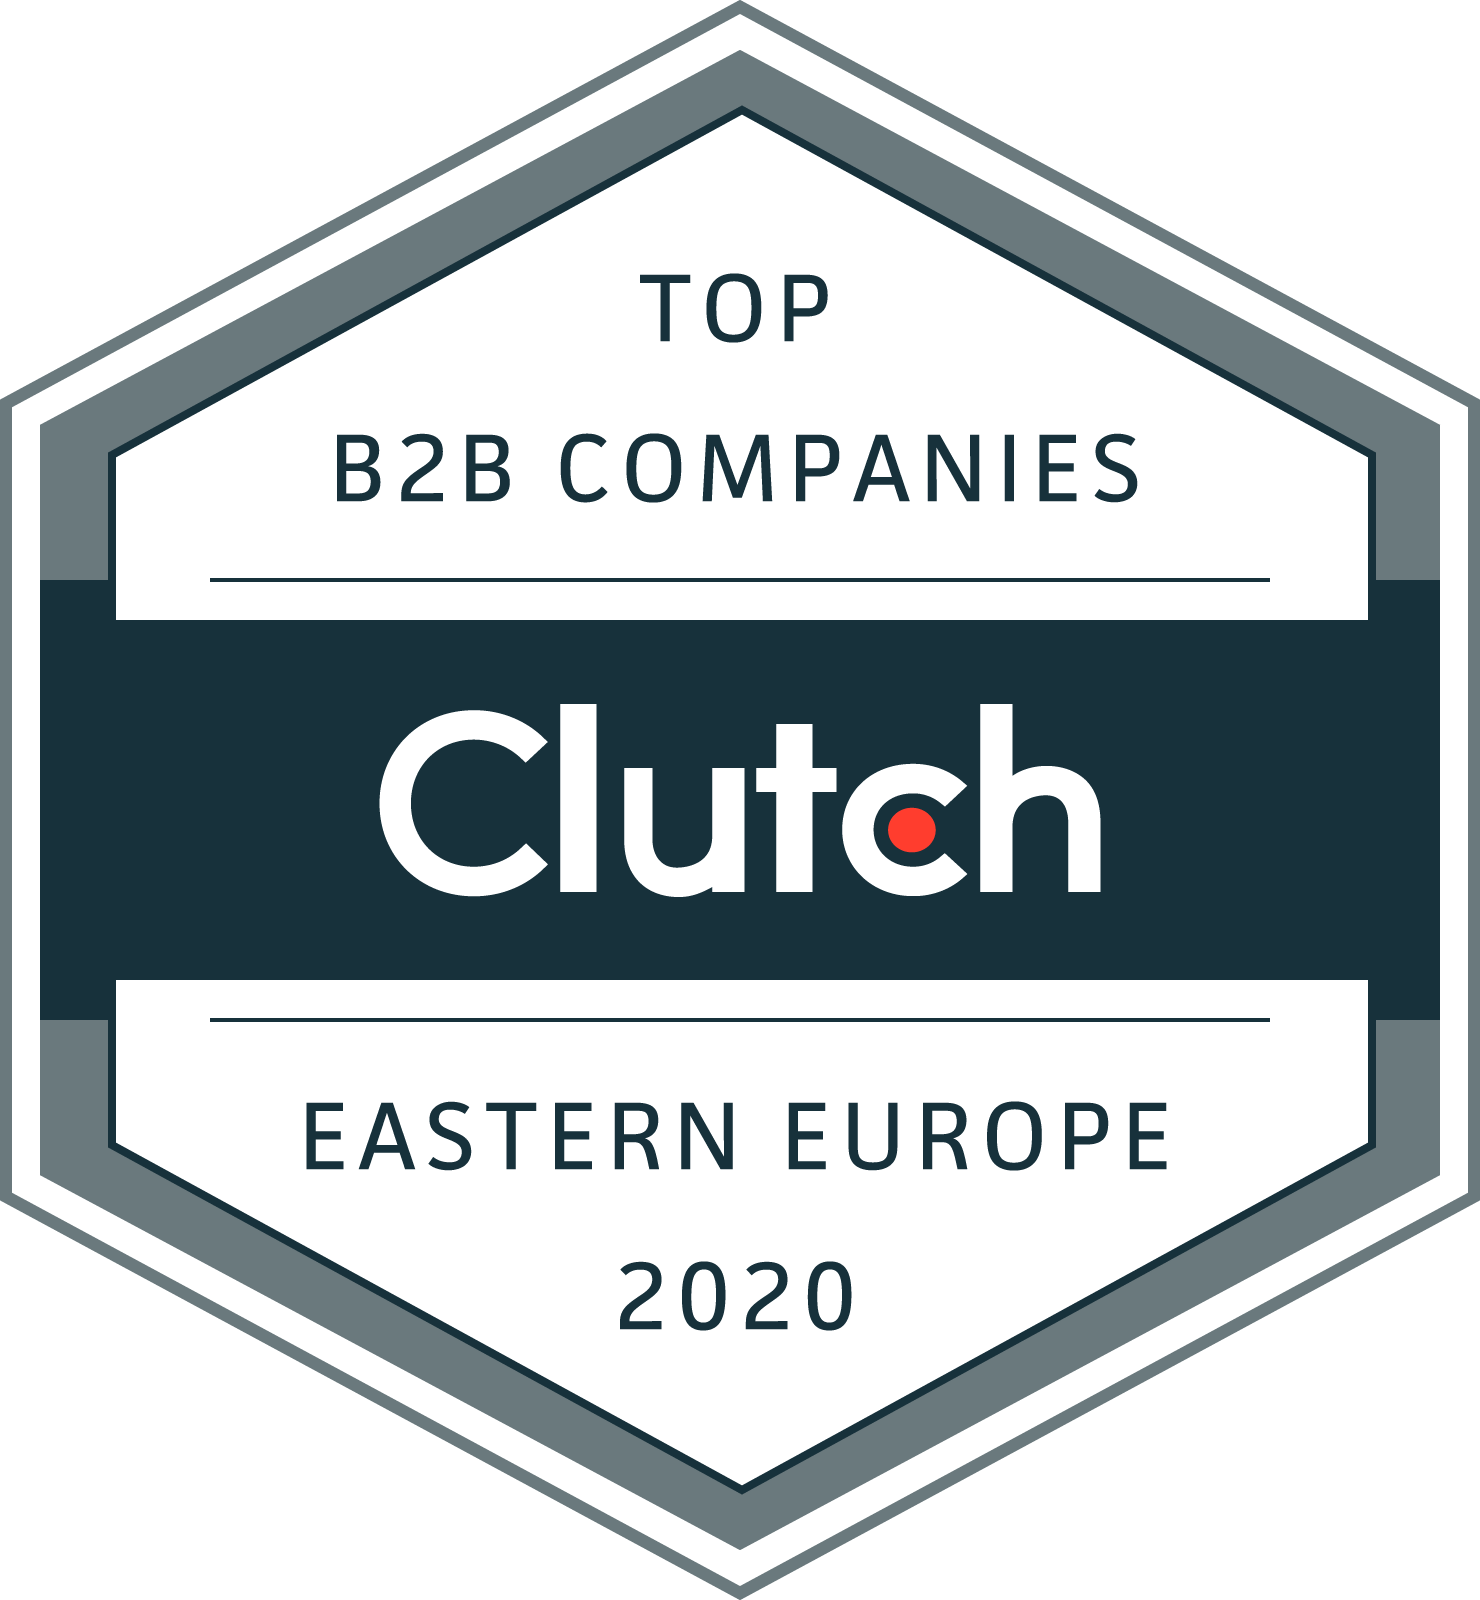 Top B2B Companies Eastern Europe